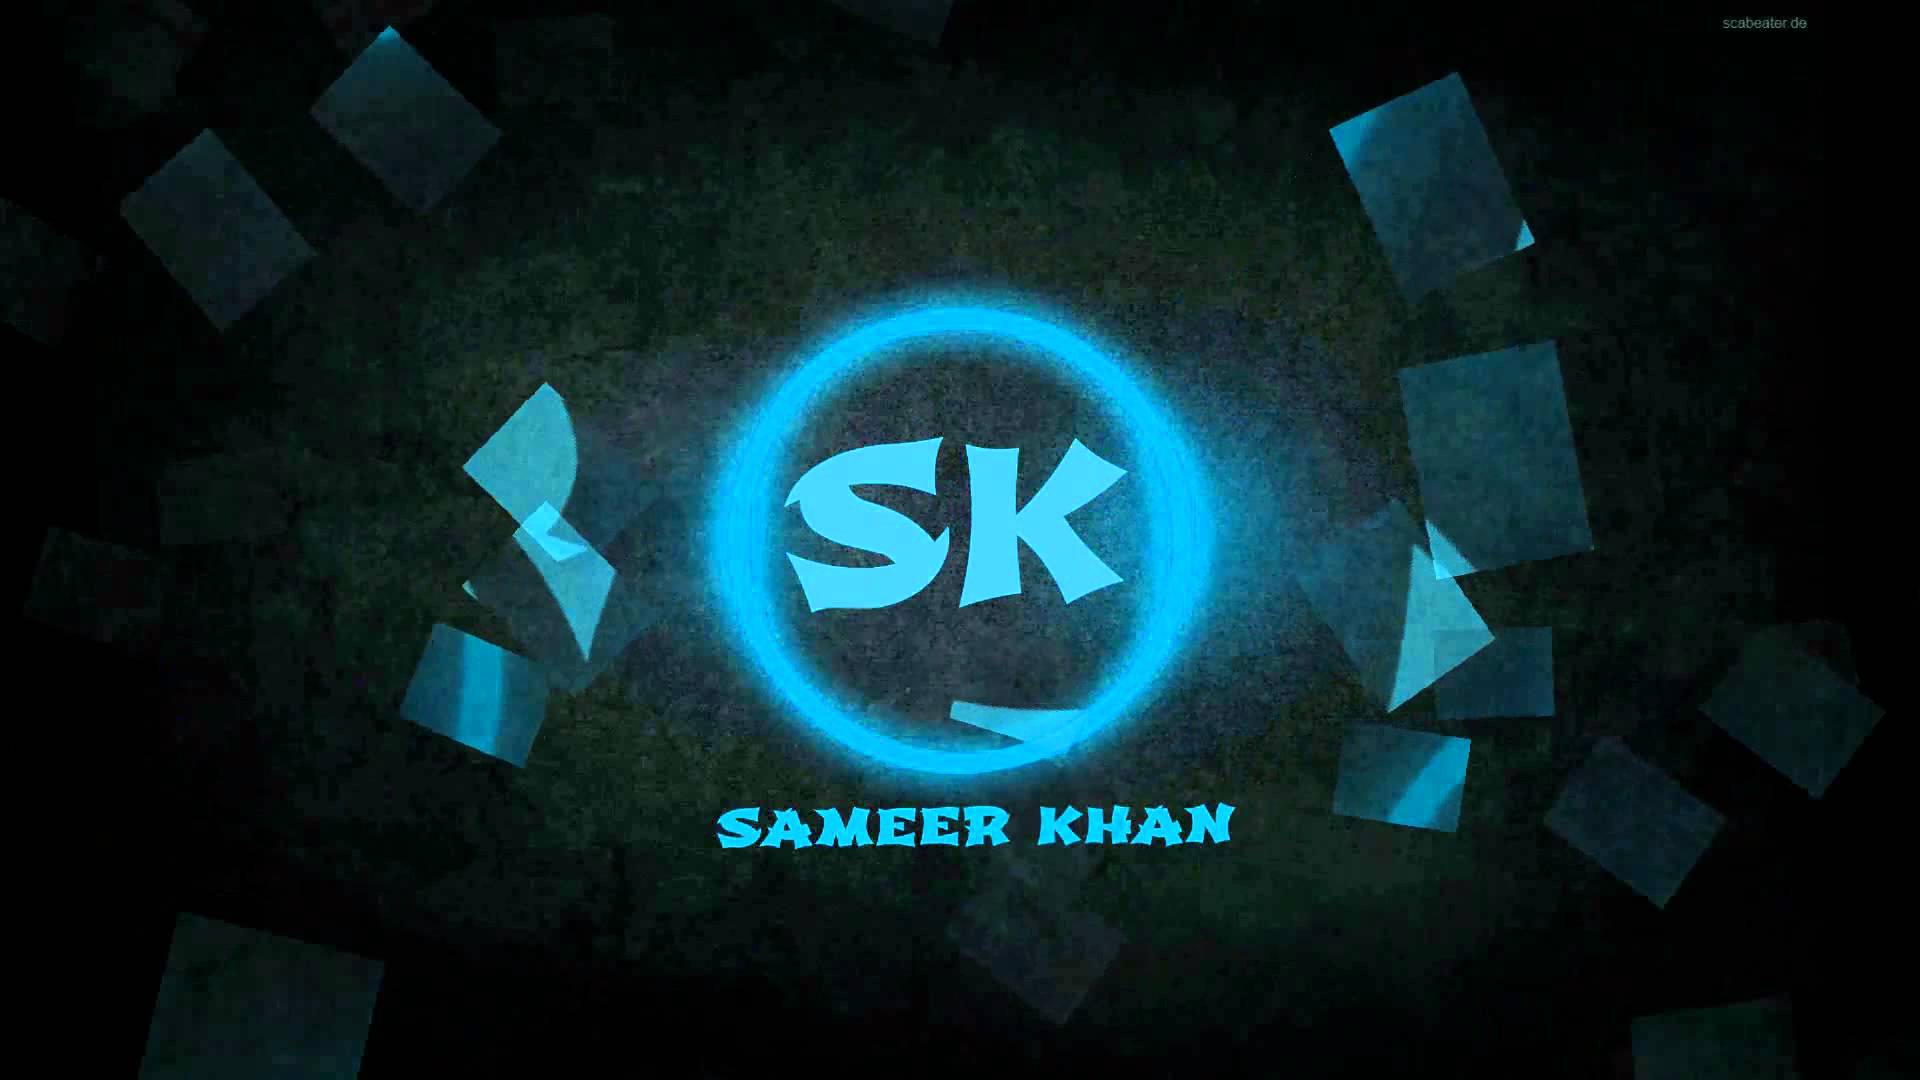 Sameer Khan Logo (SK)